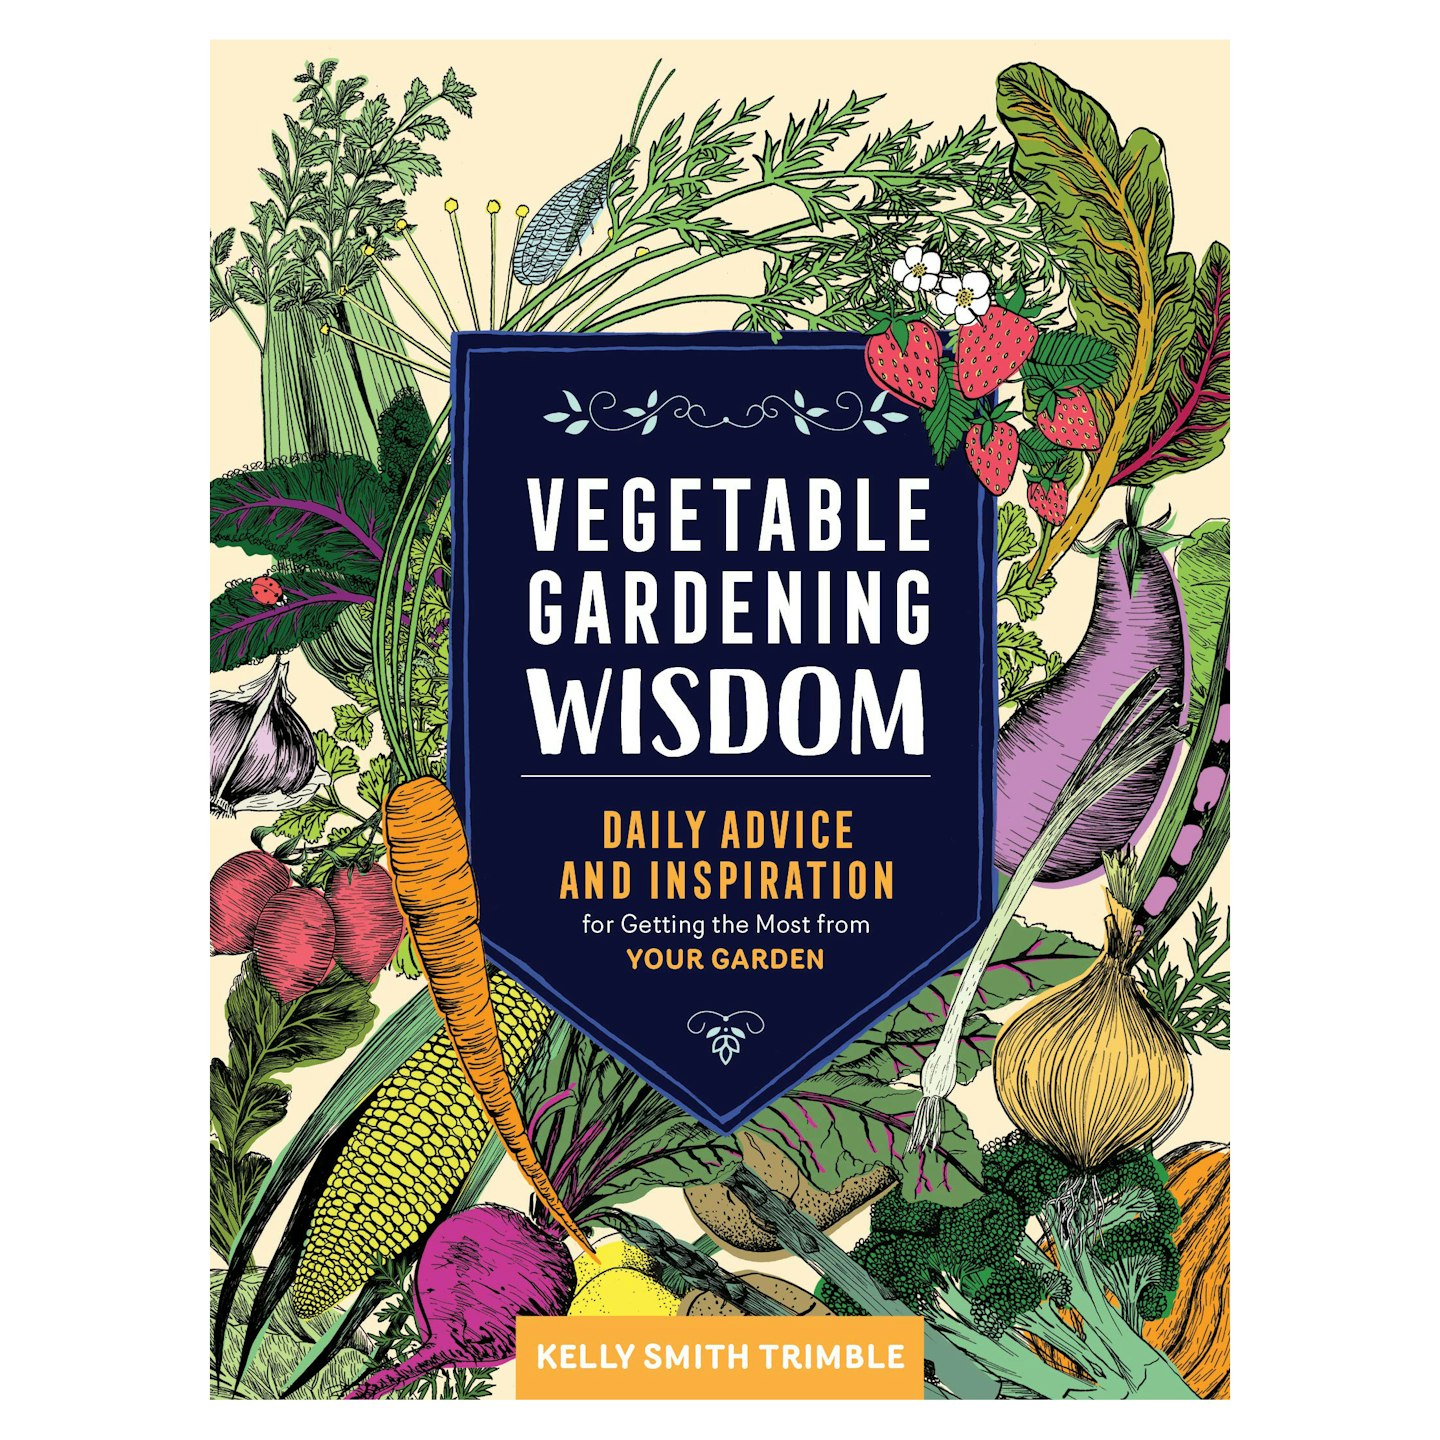 Vegetable Gardening Wisdom by Kelly Smith Trimble